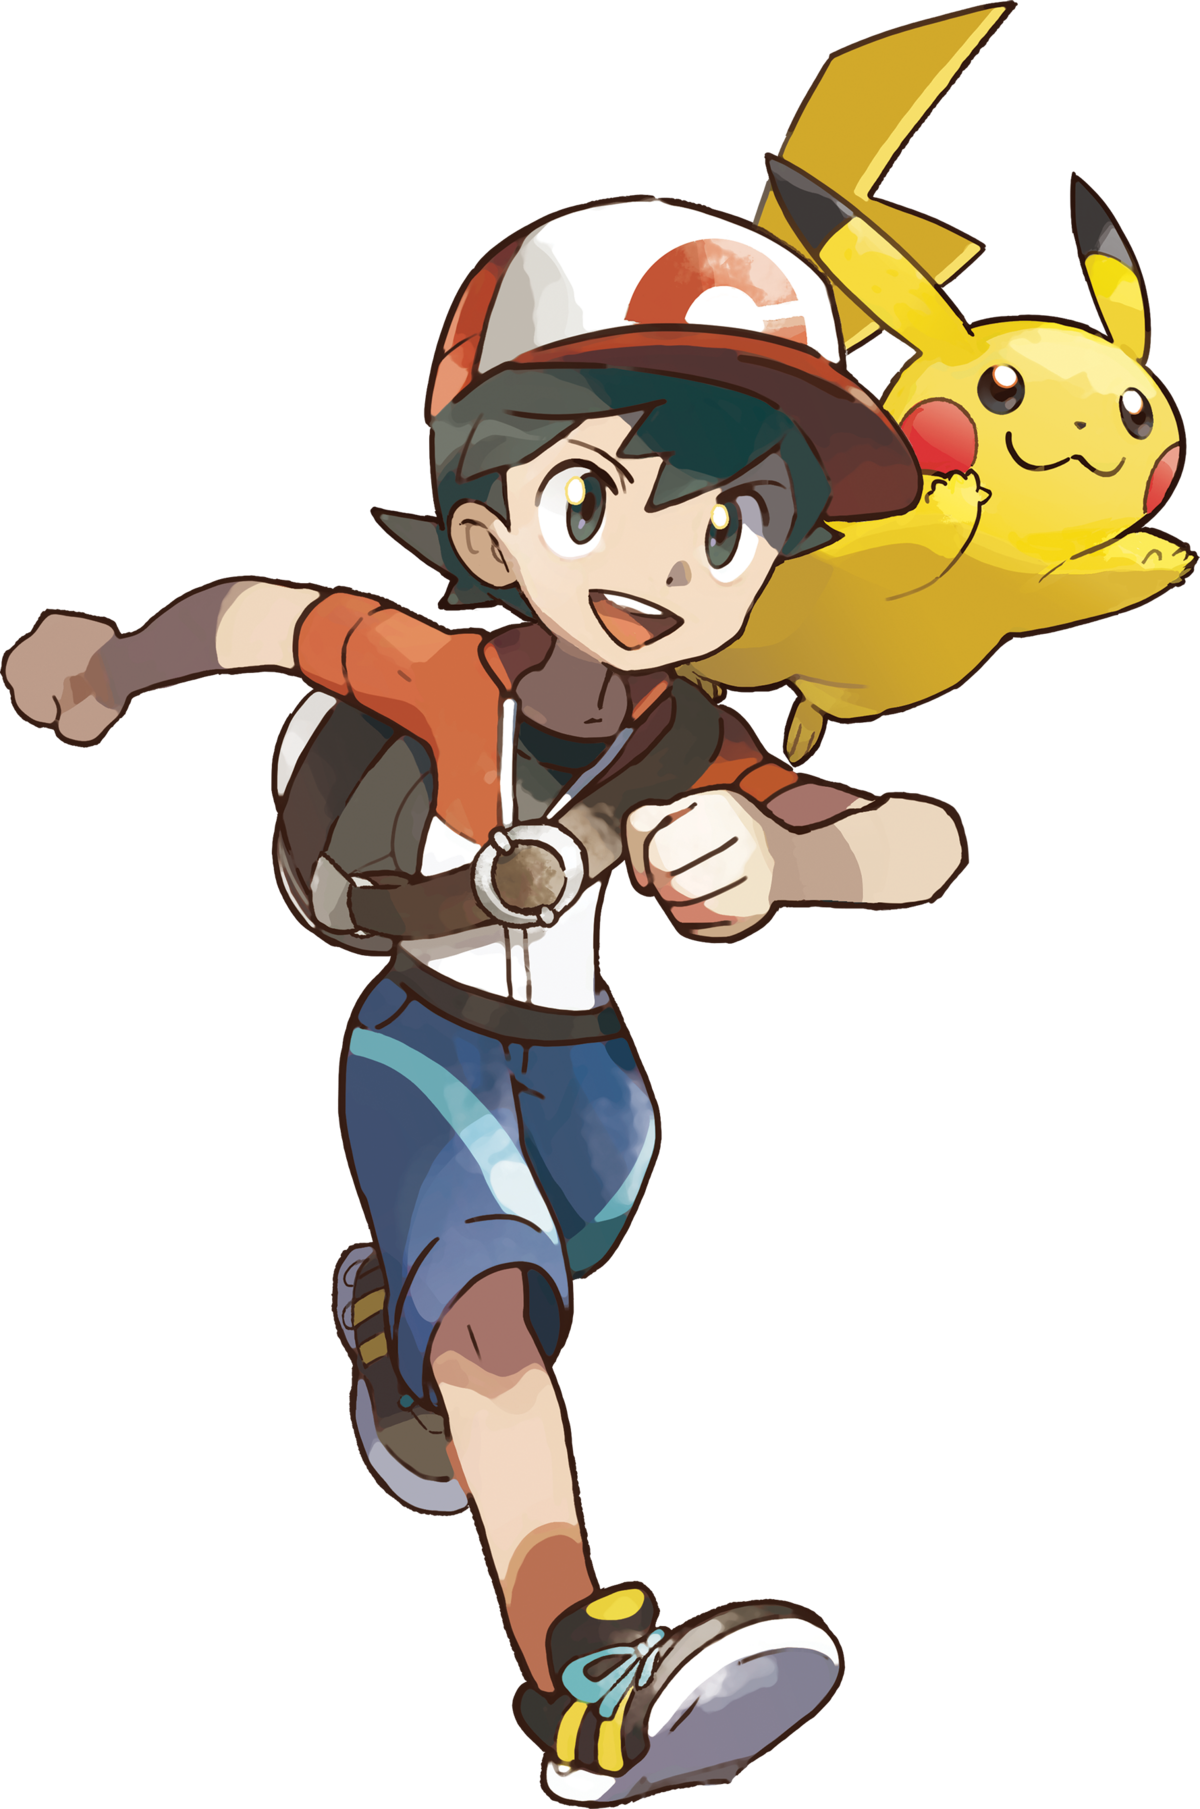 Player character - Bulbapedia, the community-driven Pokémon encyclopedia